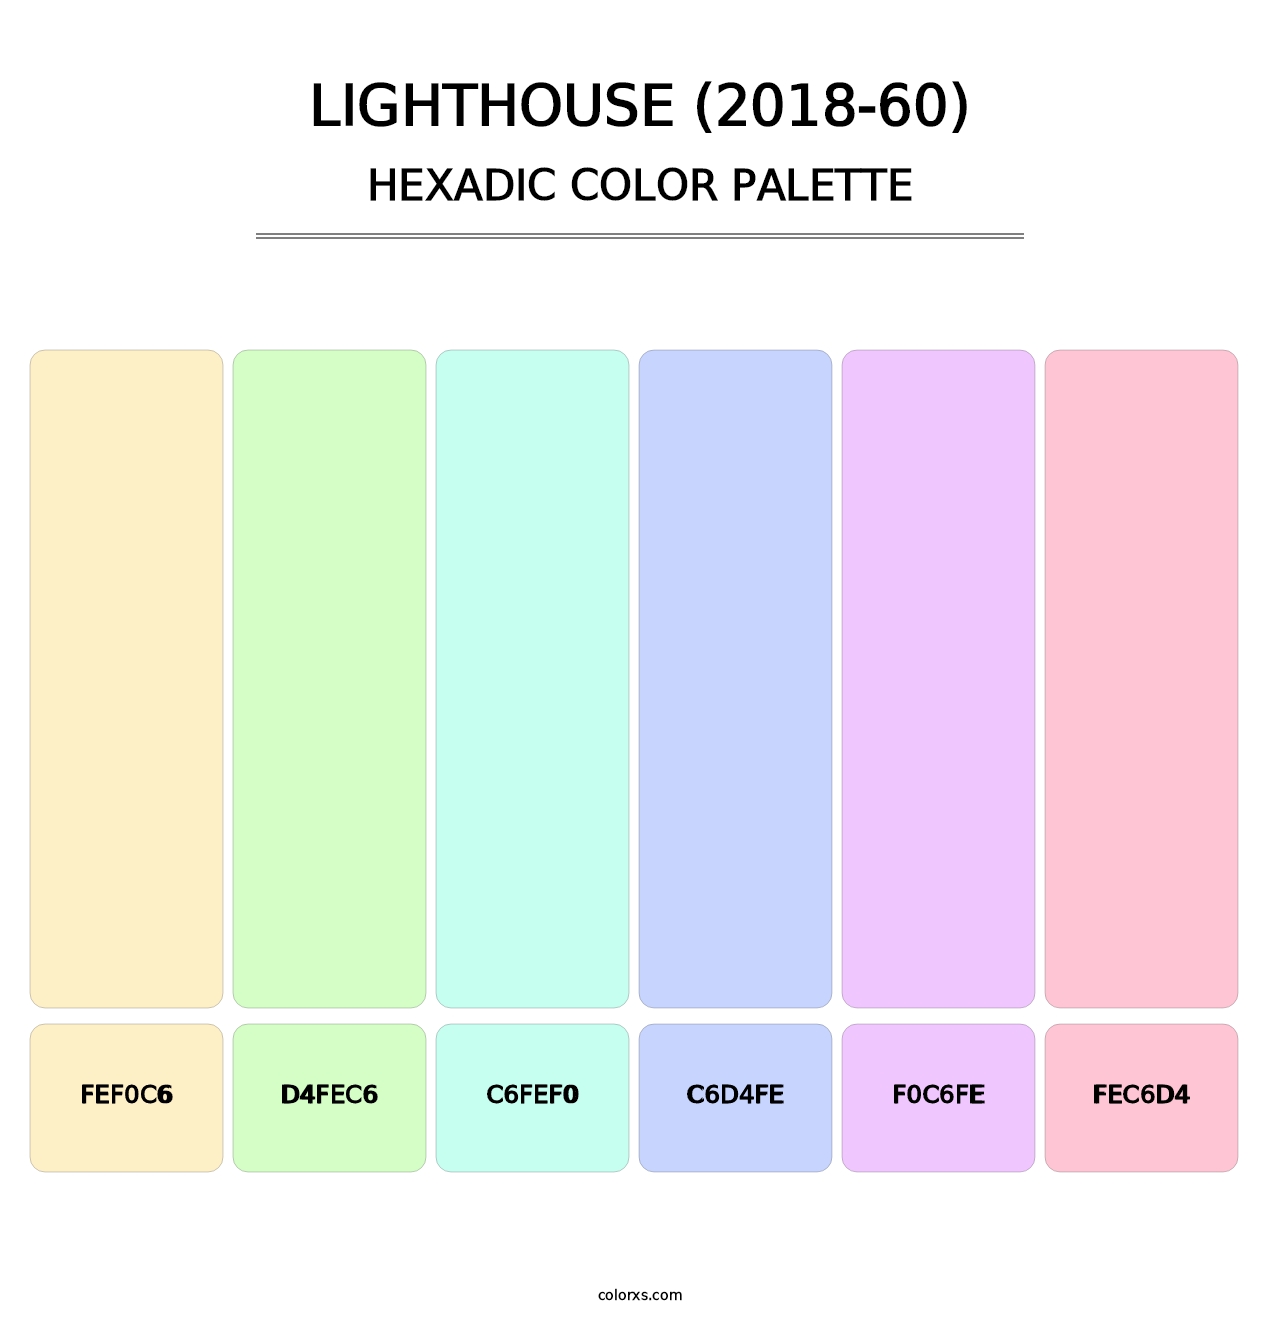 Lighthouse (2018-60) - Hexadic Color Palette